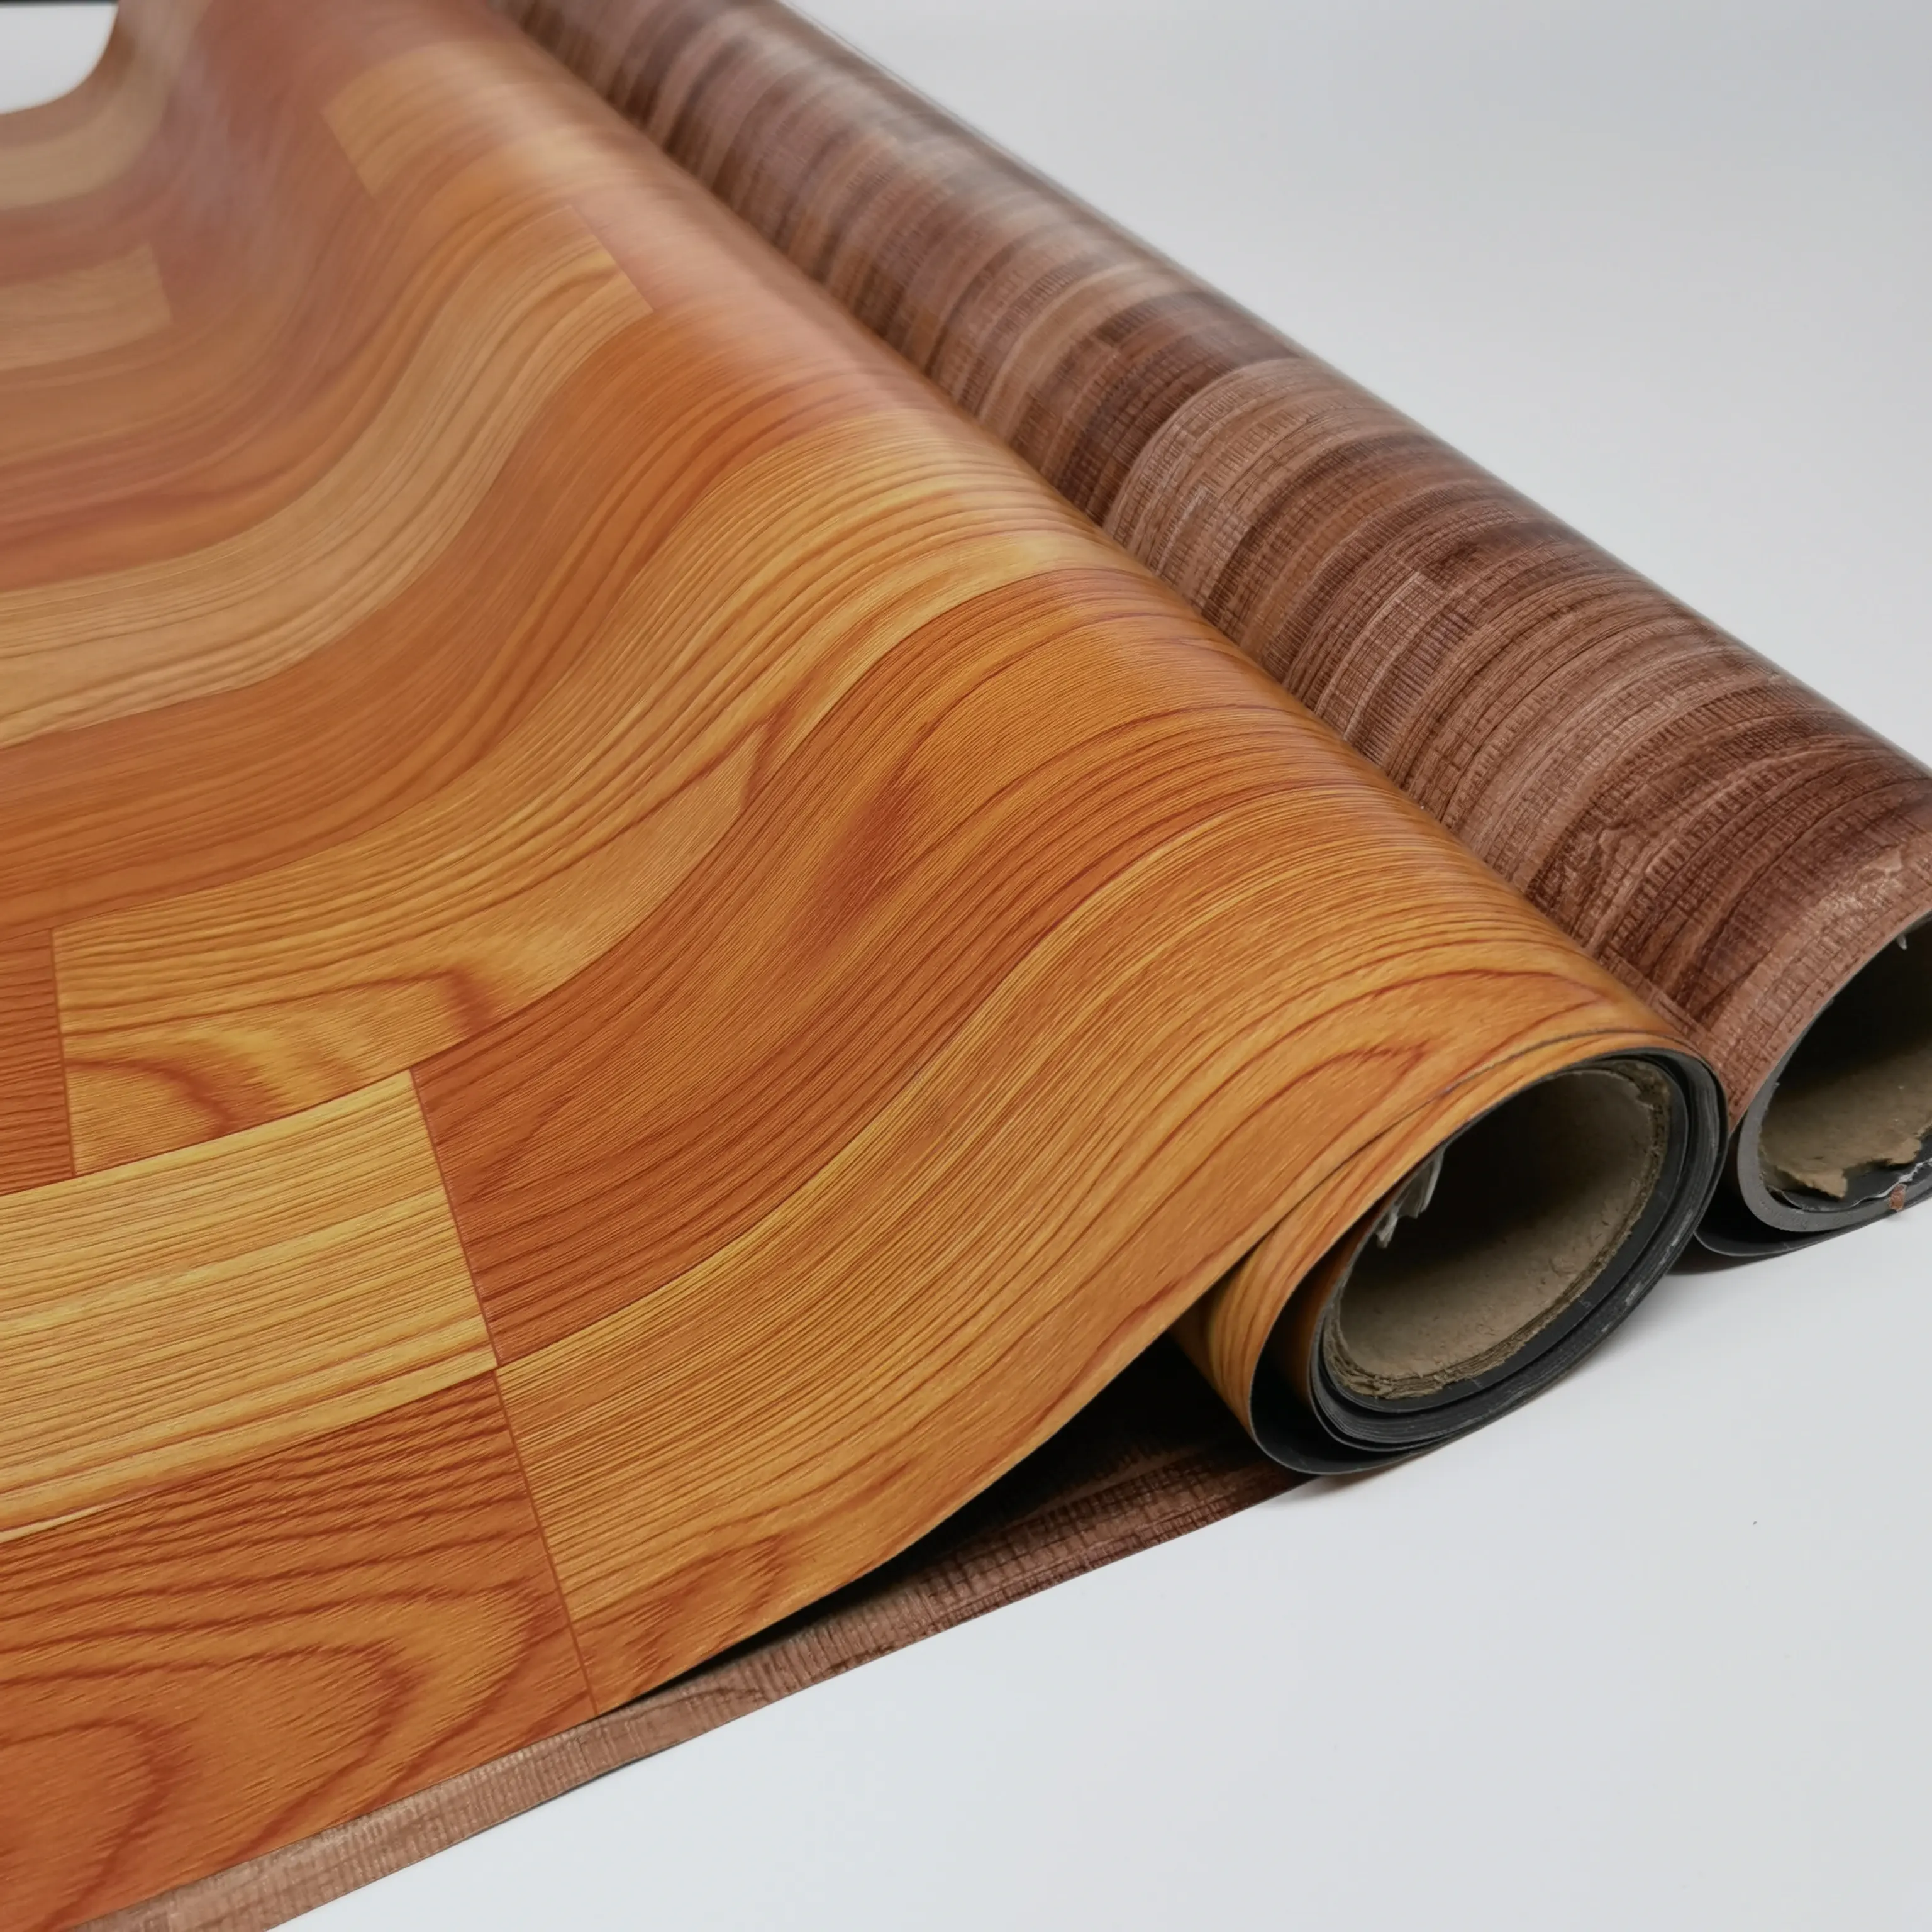 PVC Bodenbelag Rolle Vinyl Teppich Kunststoff Linoleum Matte Parkett Marmor Laminat Blatt Holz Design